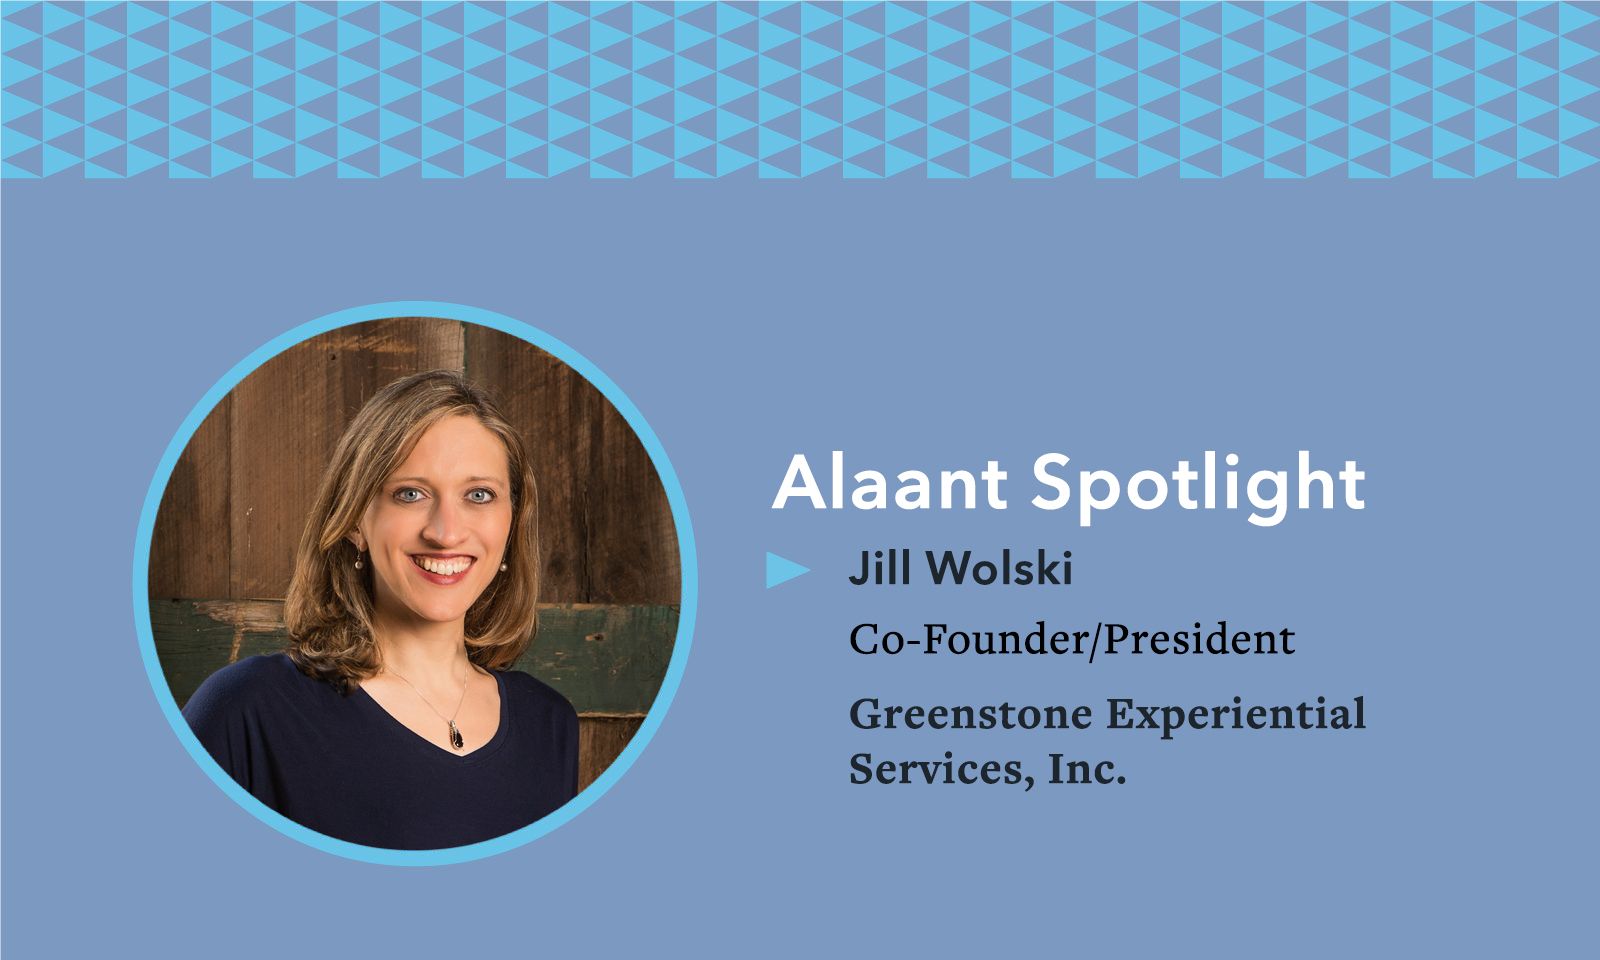 Alaant Spotlight Jill Wolski Co-Founder President Greenstone Experiential Services, Inc.